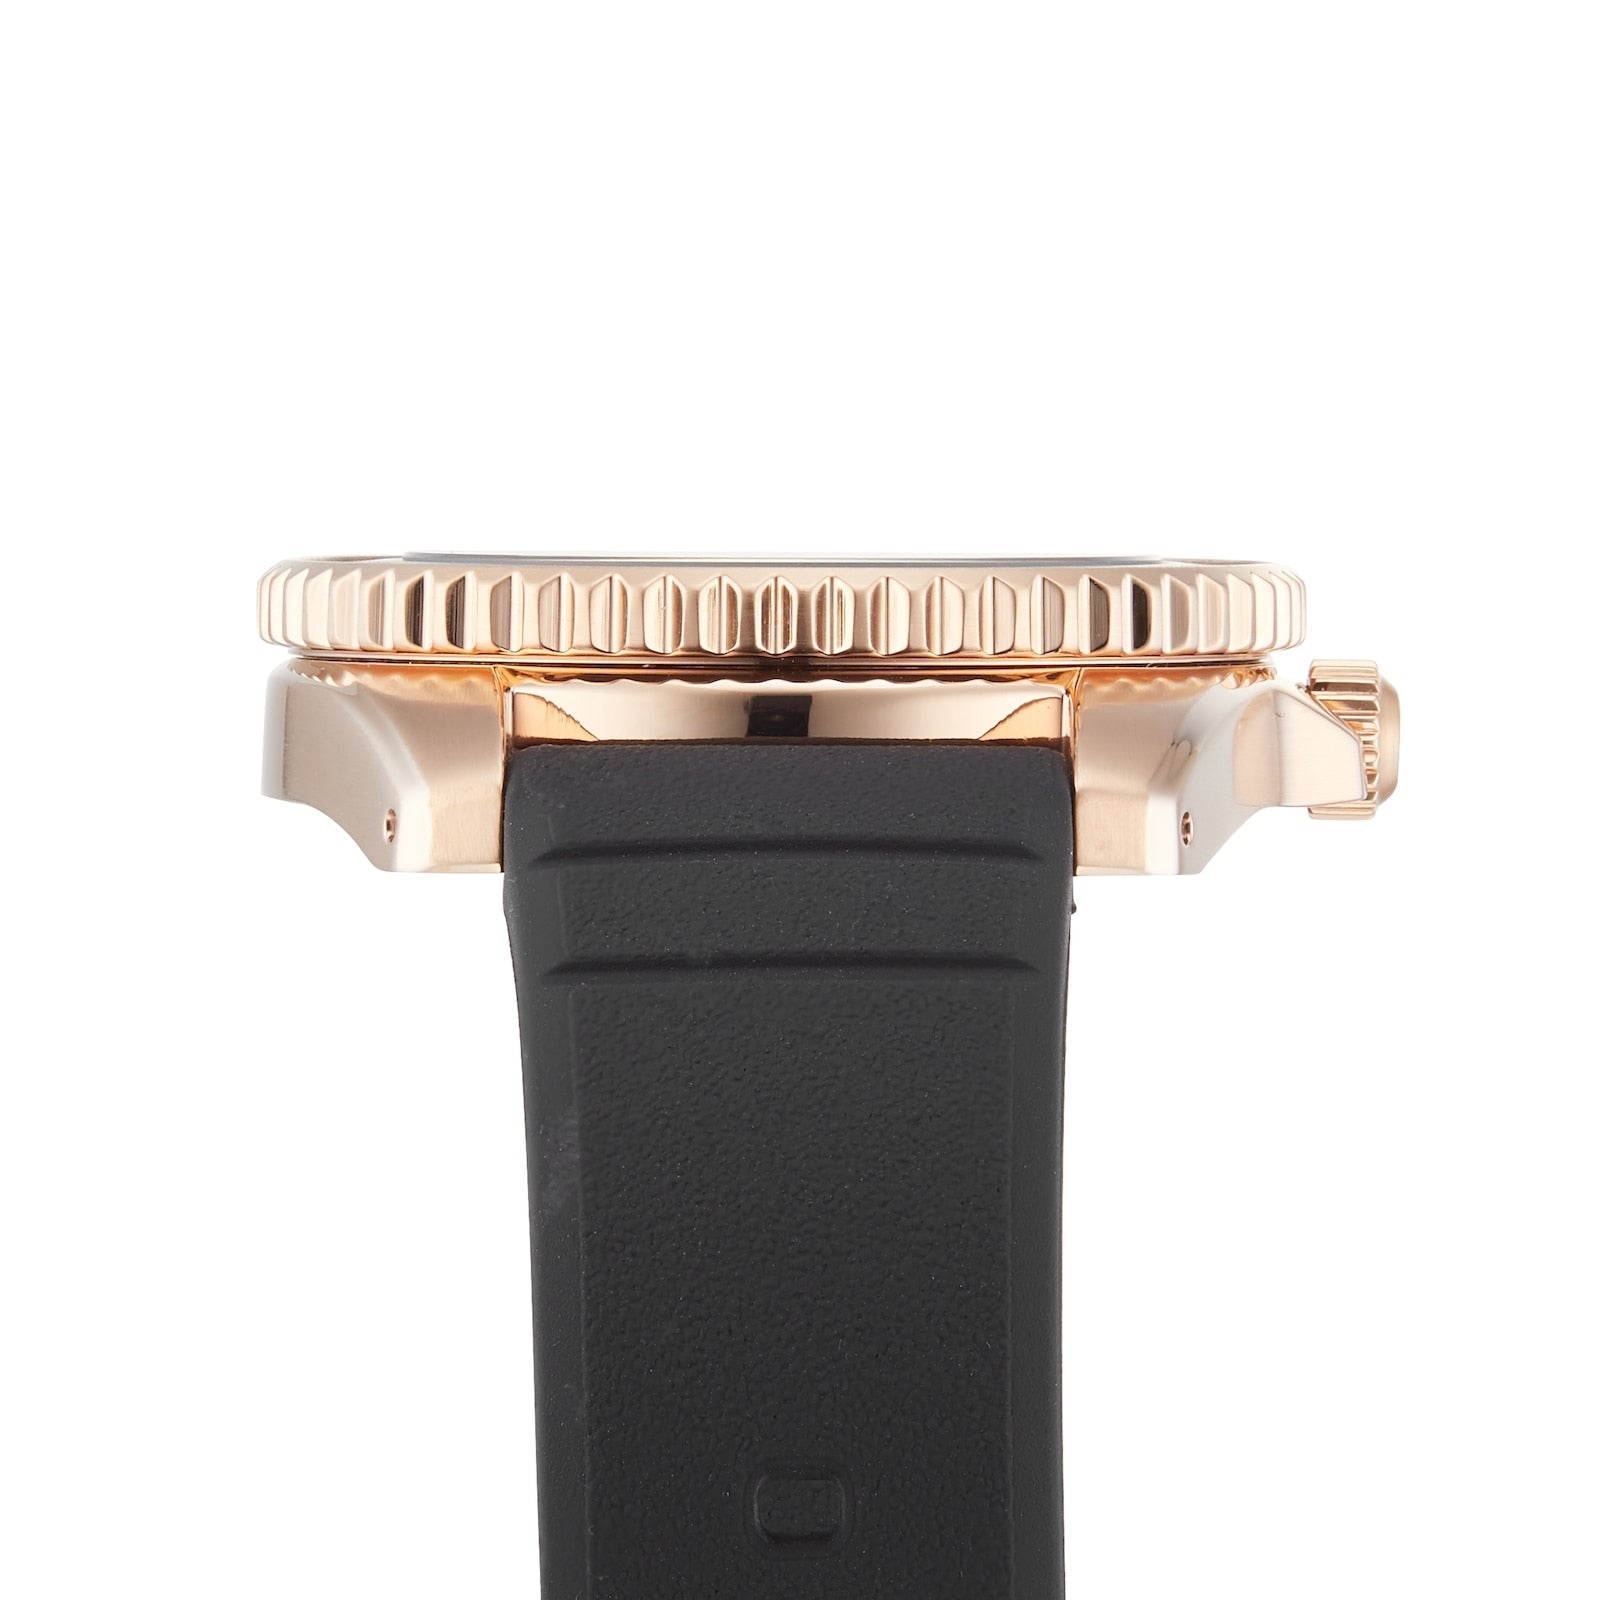 Men's Watches Online - Seiko Prospex Compact Solar Scuba Diver's Watch